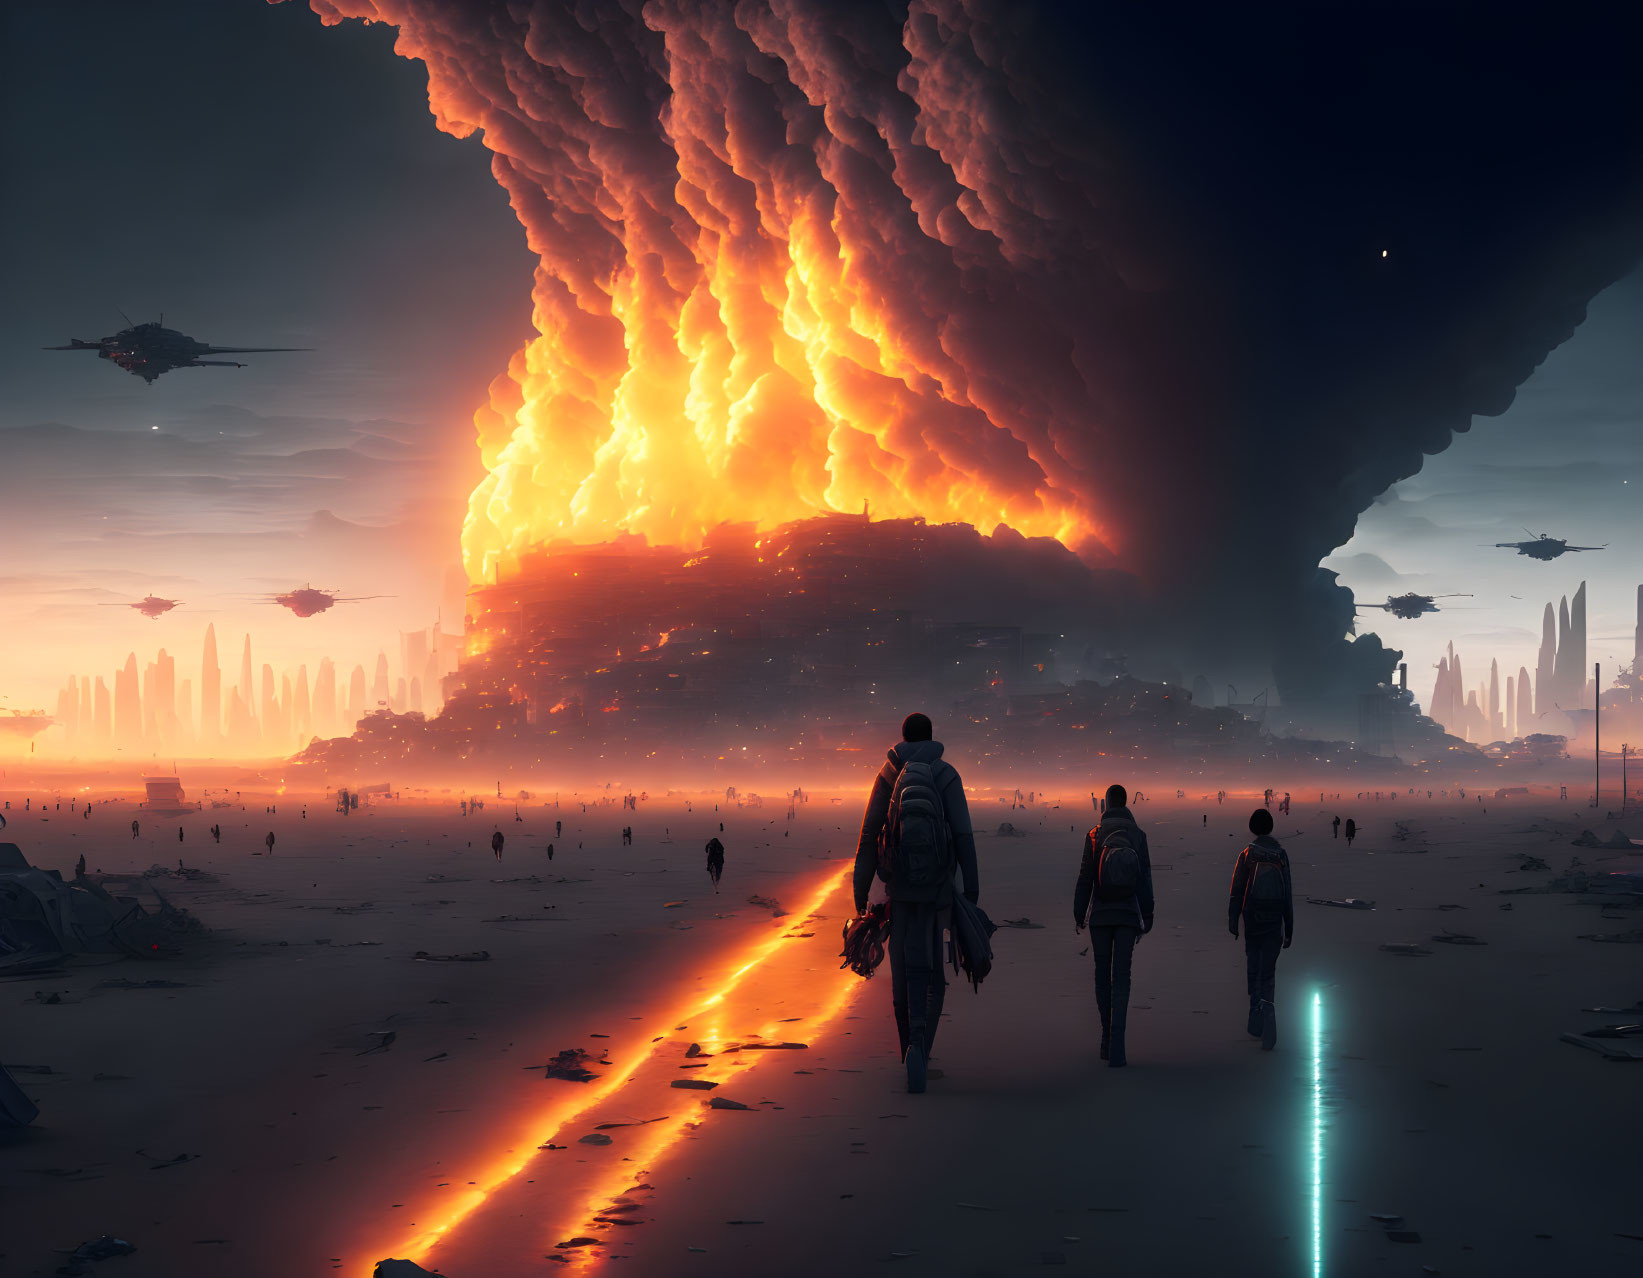 Three individuals in futuristic gear approach fiery explosion in dystopian cityscape.